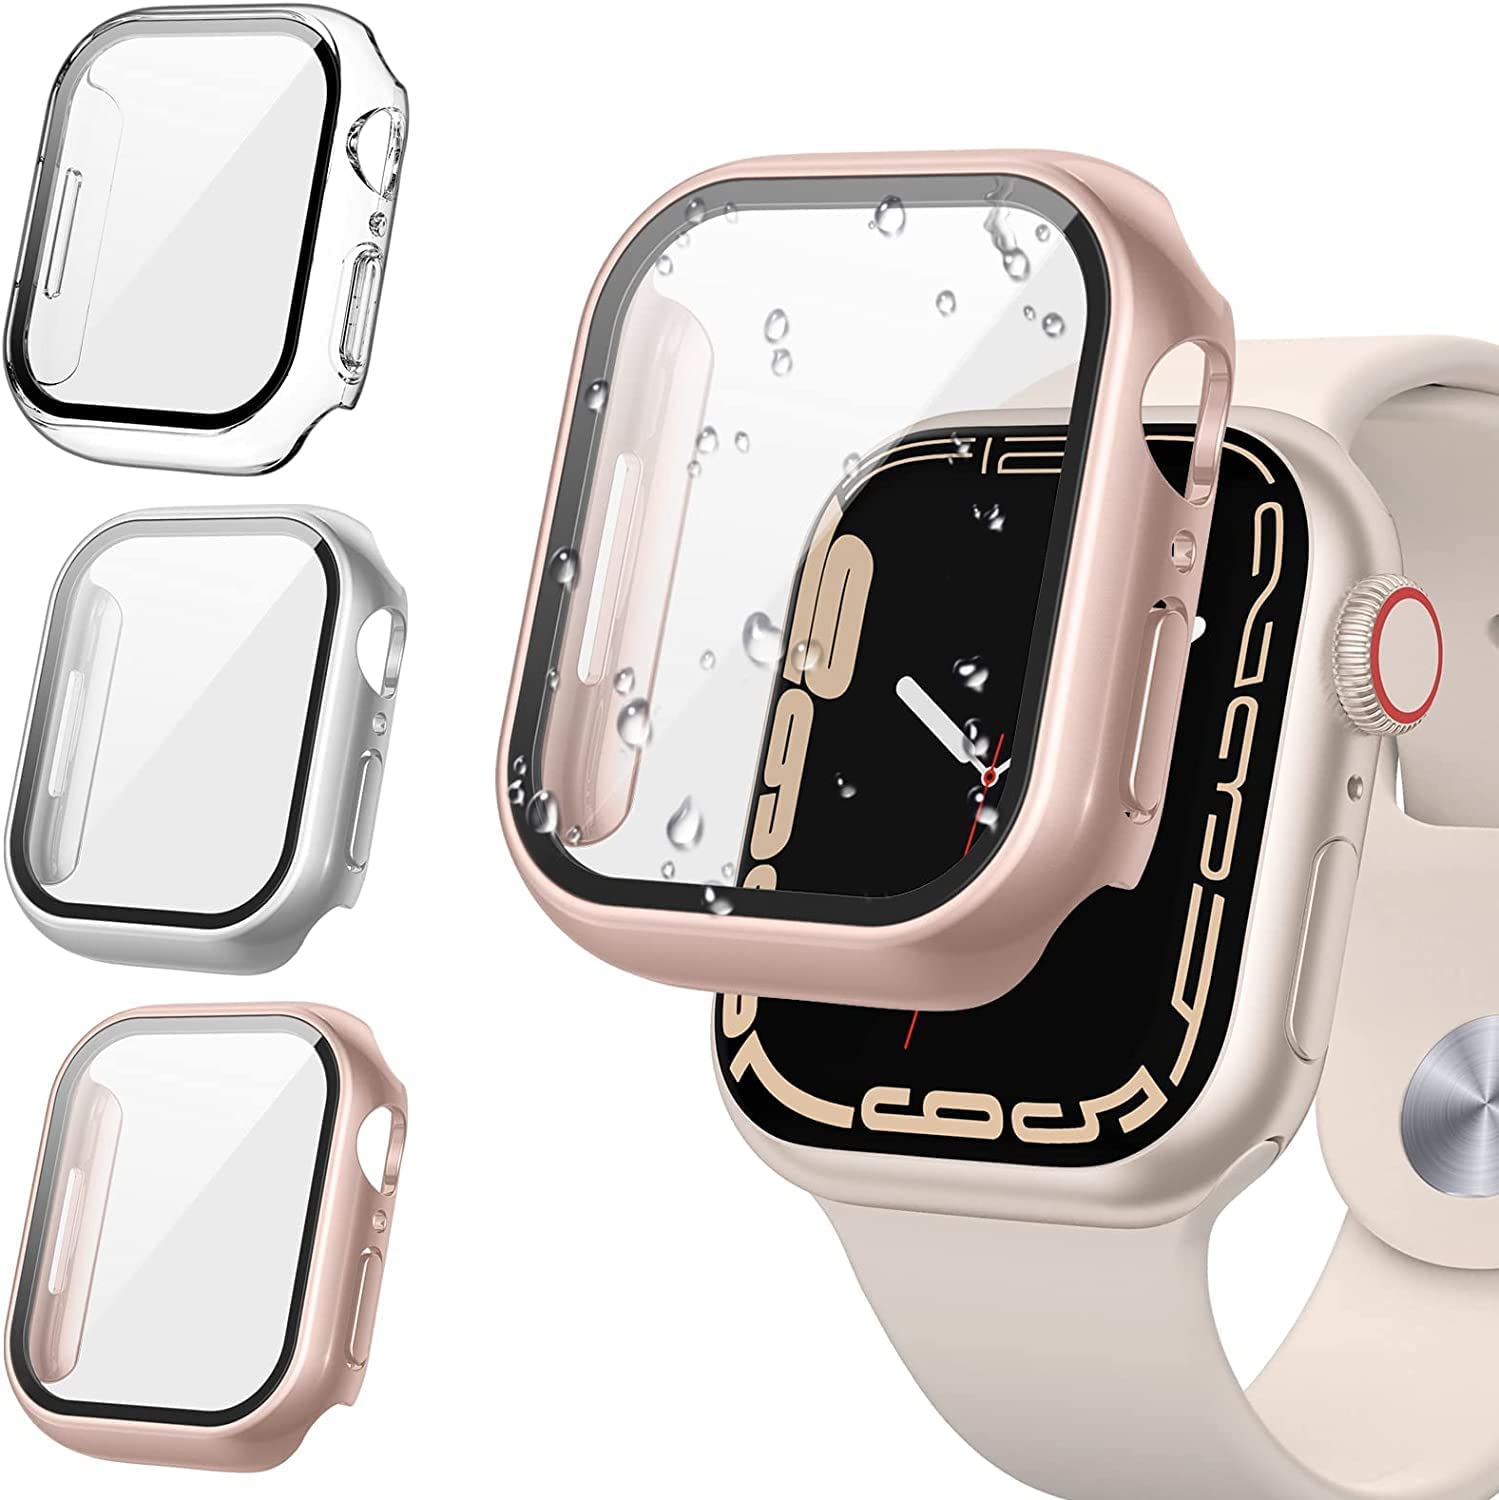 3Pack Tensa Apple Watch 스크린 프로텍터 케이스 시리즈 8741mm 아이워치 프로텍션 페이스 커버 강화유리 필름 하드 PC 범퍼 여성용 초박형 가드 41mm 클리어/실버/로즈골드